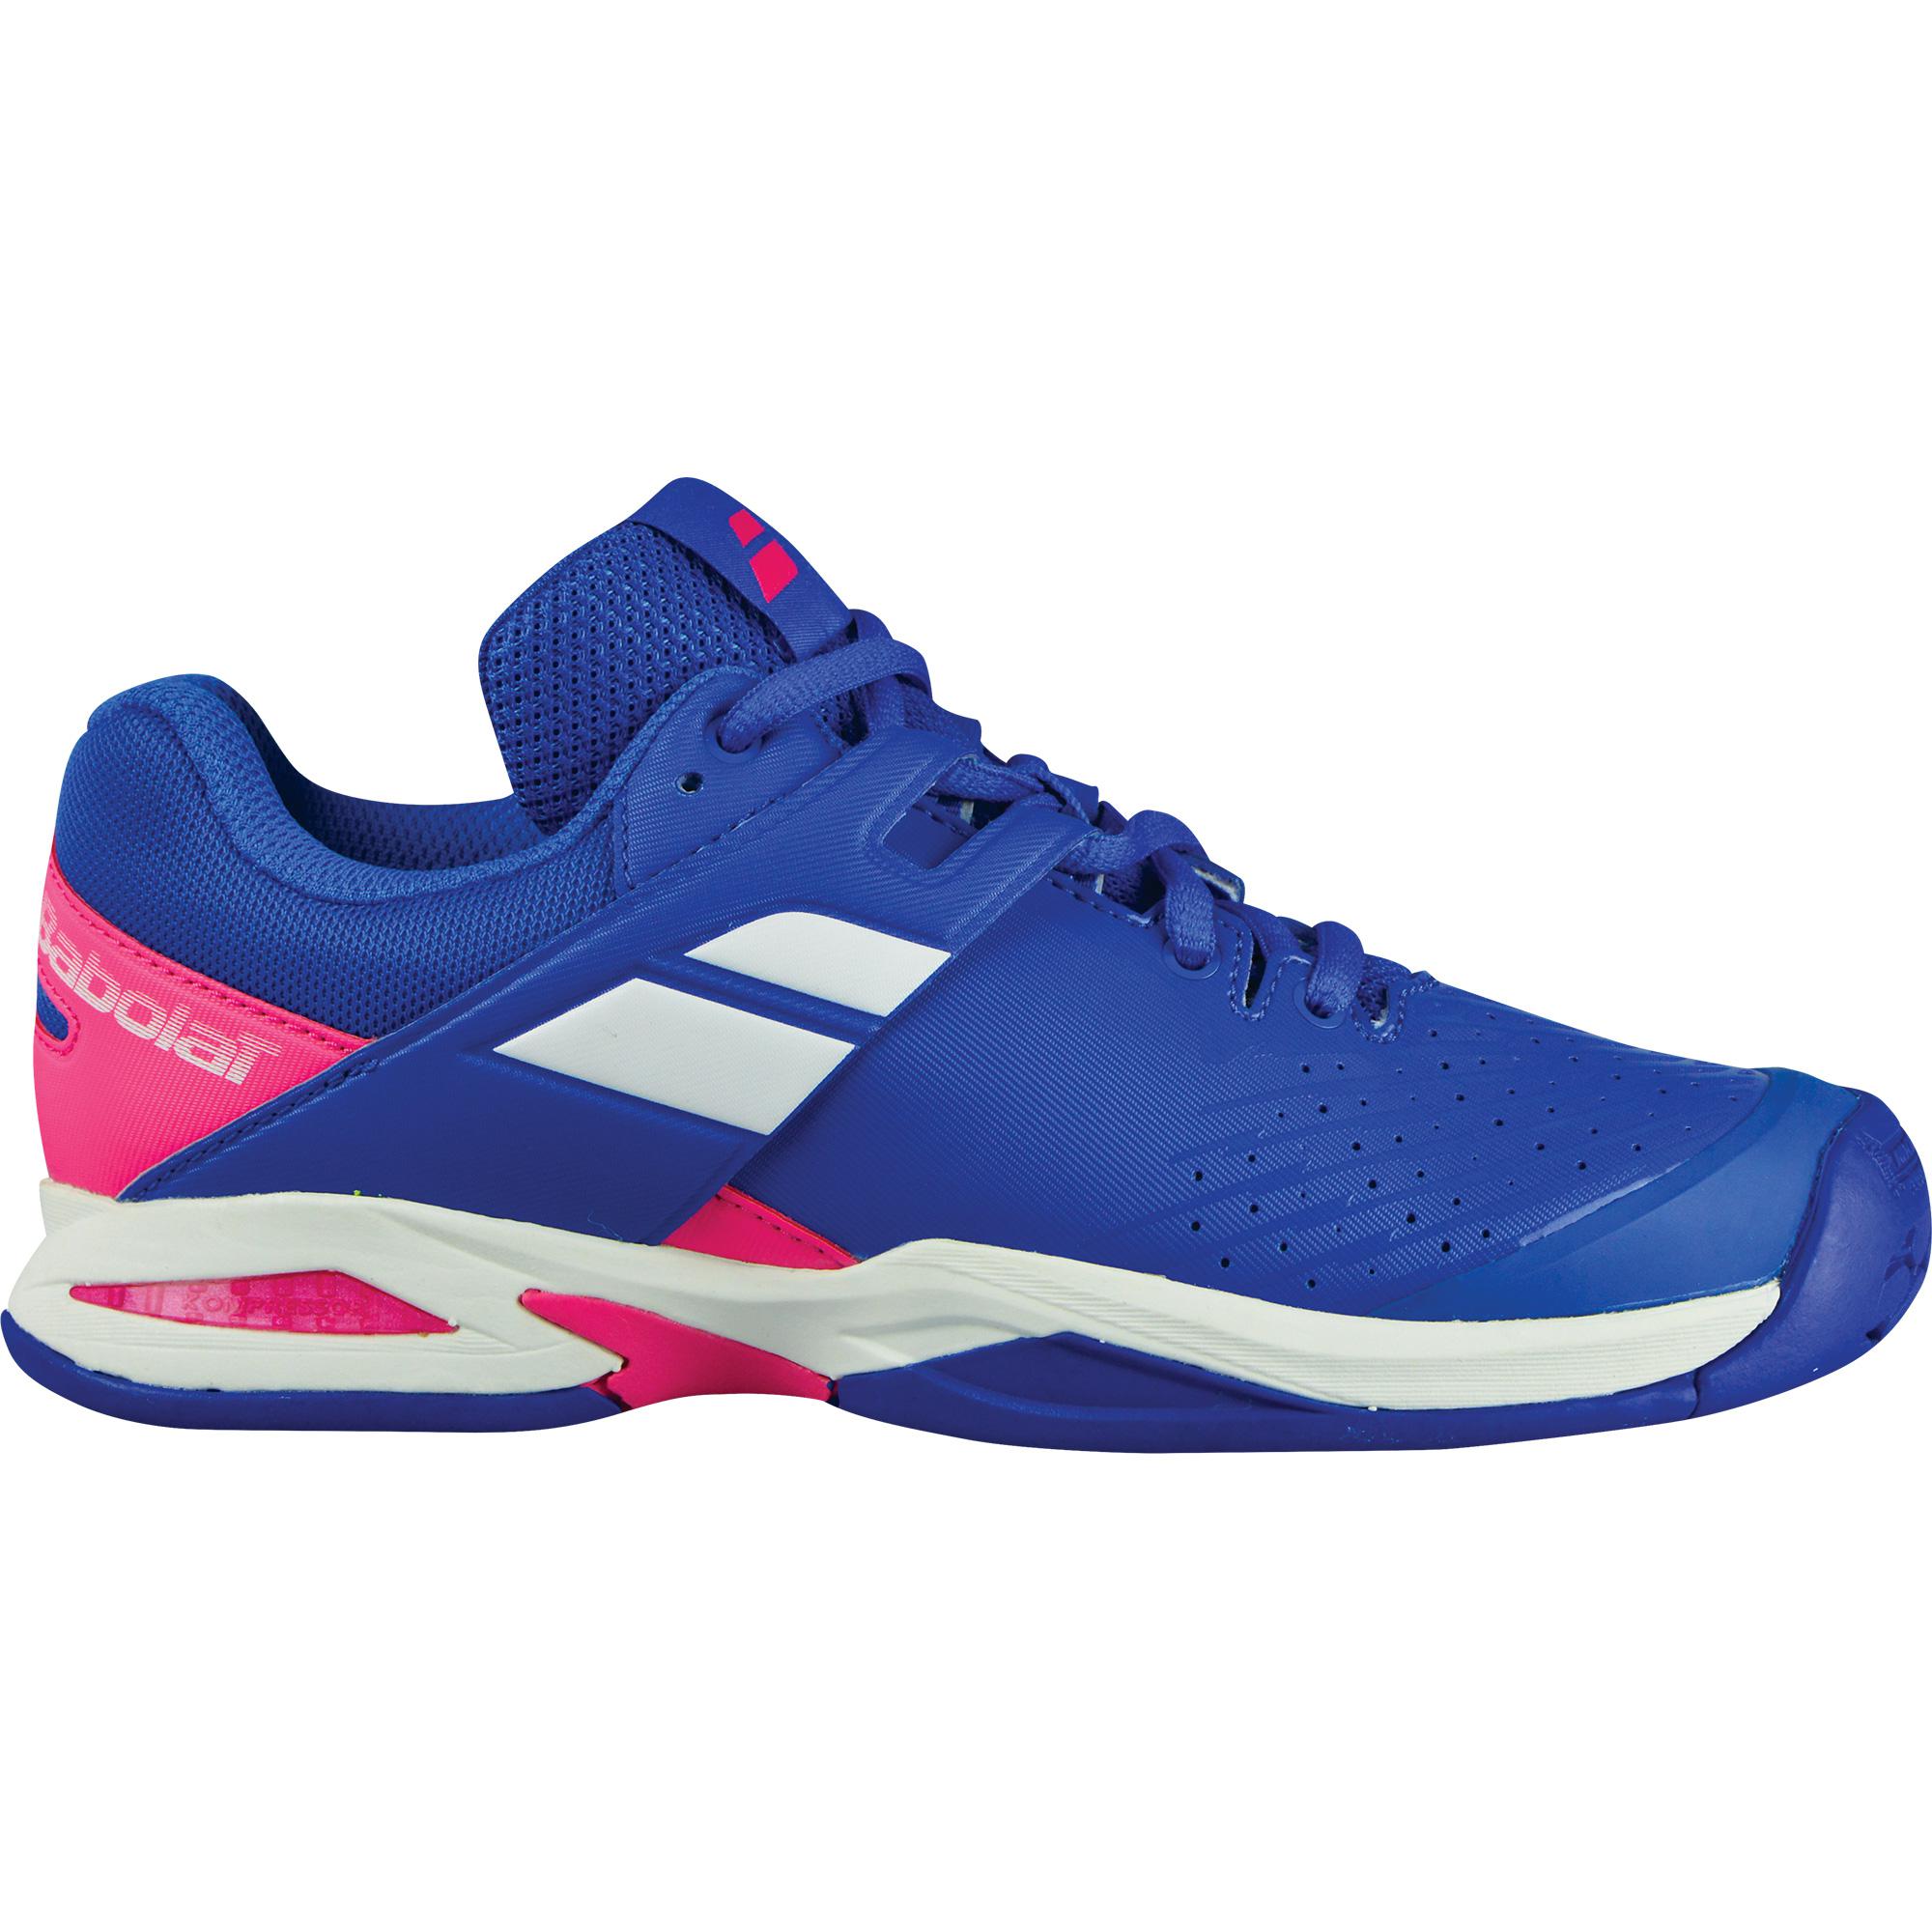 Babolat Propulse All Court Junior Tennis Shoes (Princess Blue/Fandango Pink)